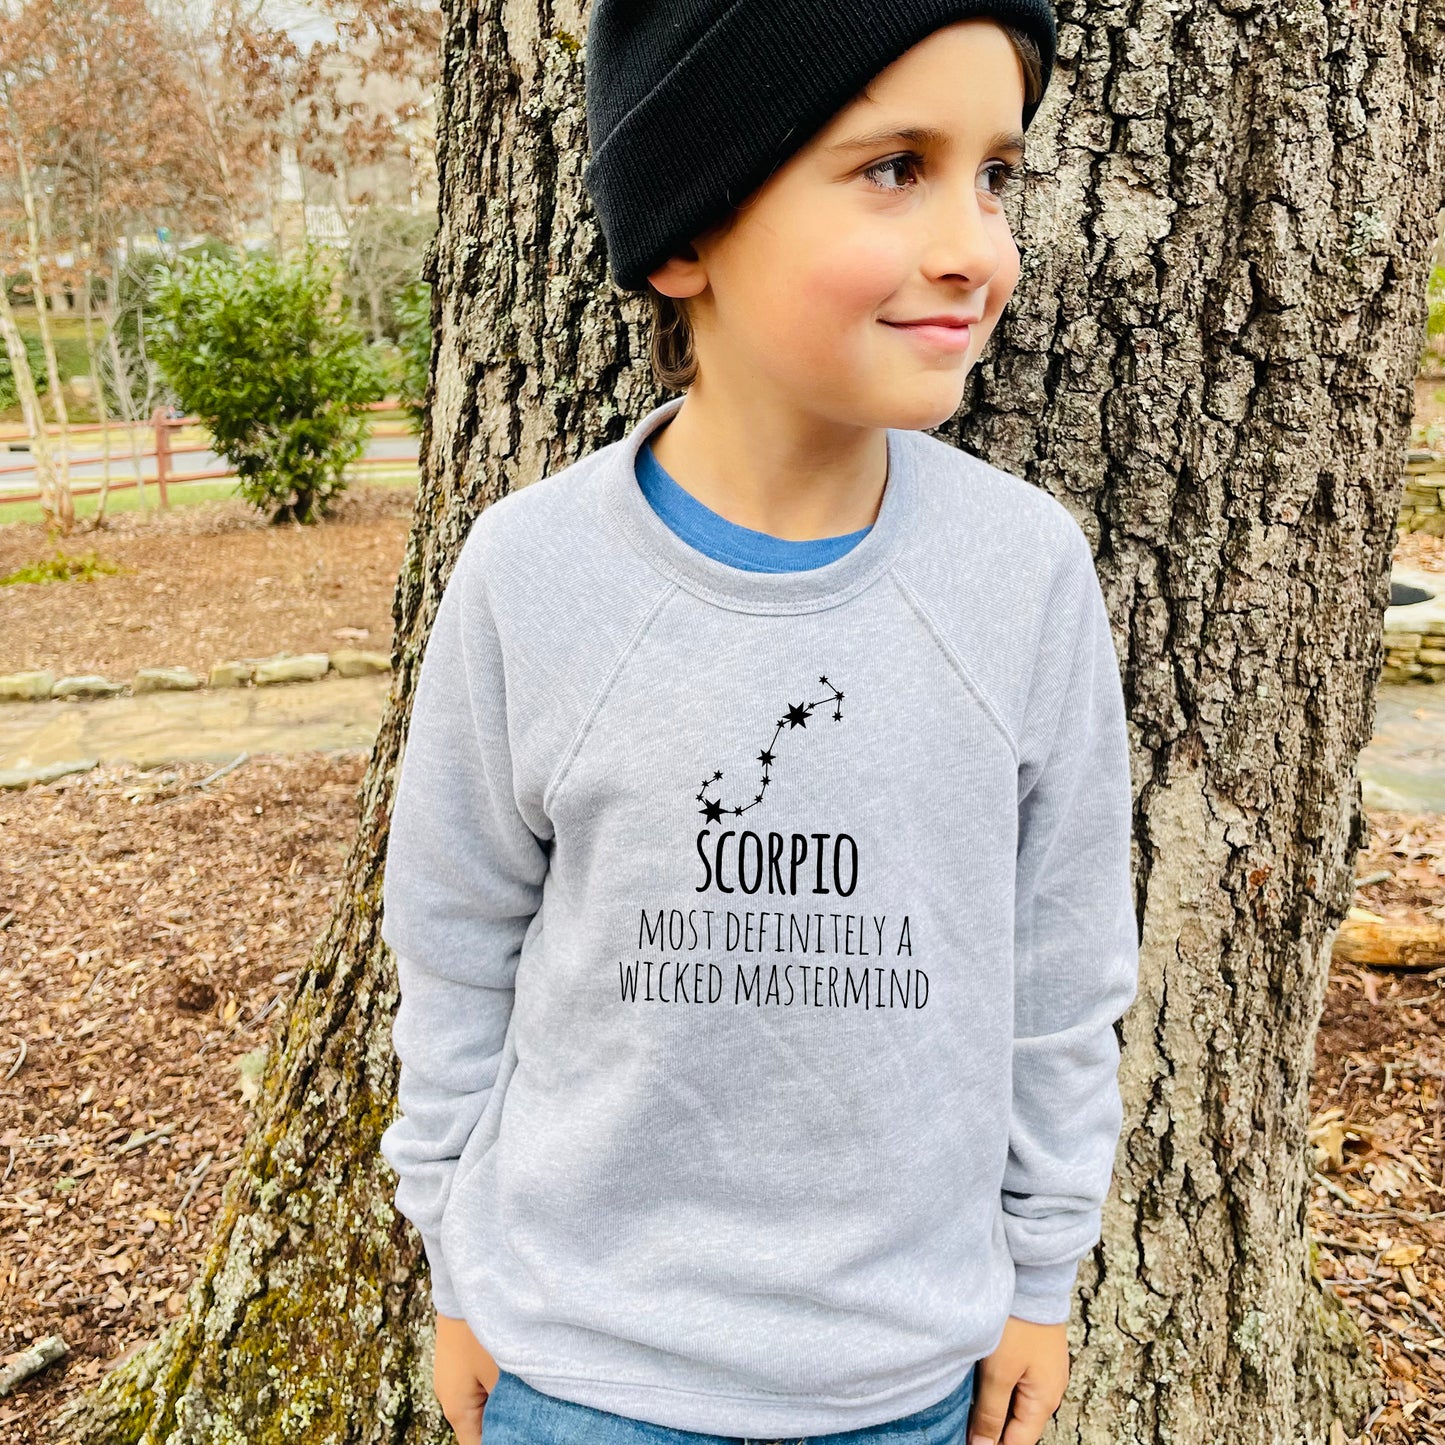 Scorpio - Kid's Sweatshirt - Heather Gray or Mauve